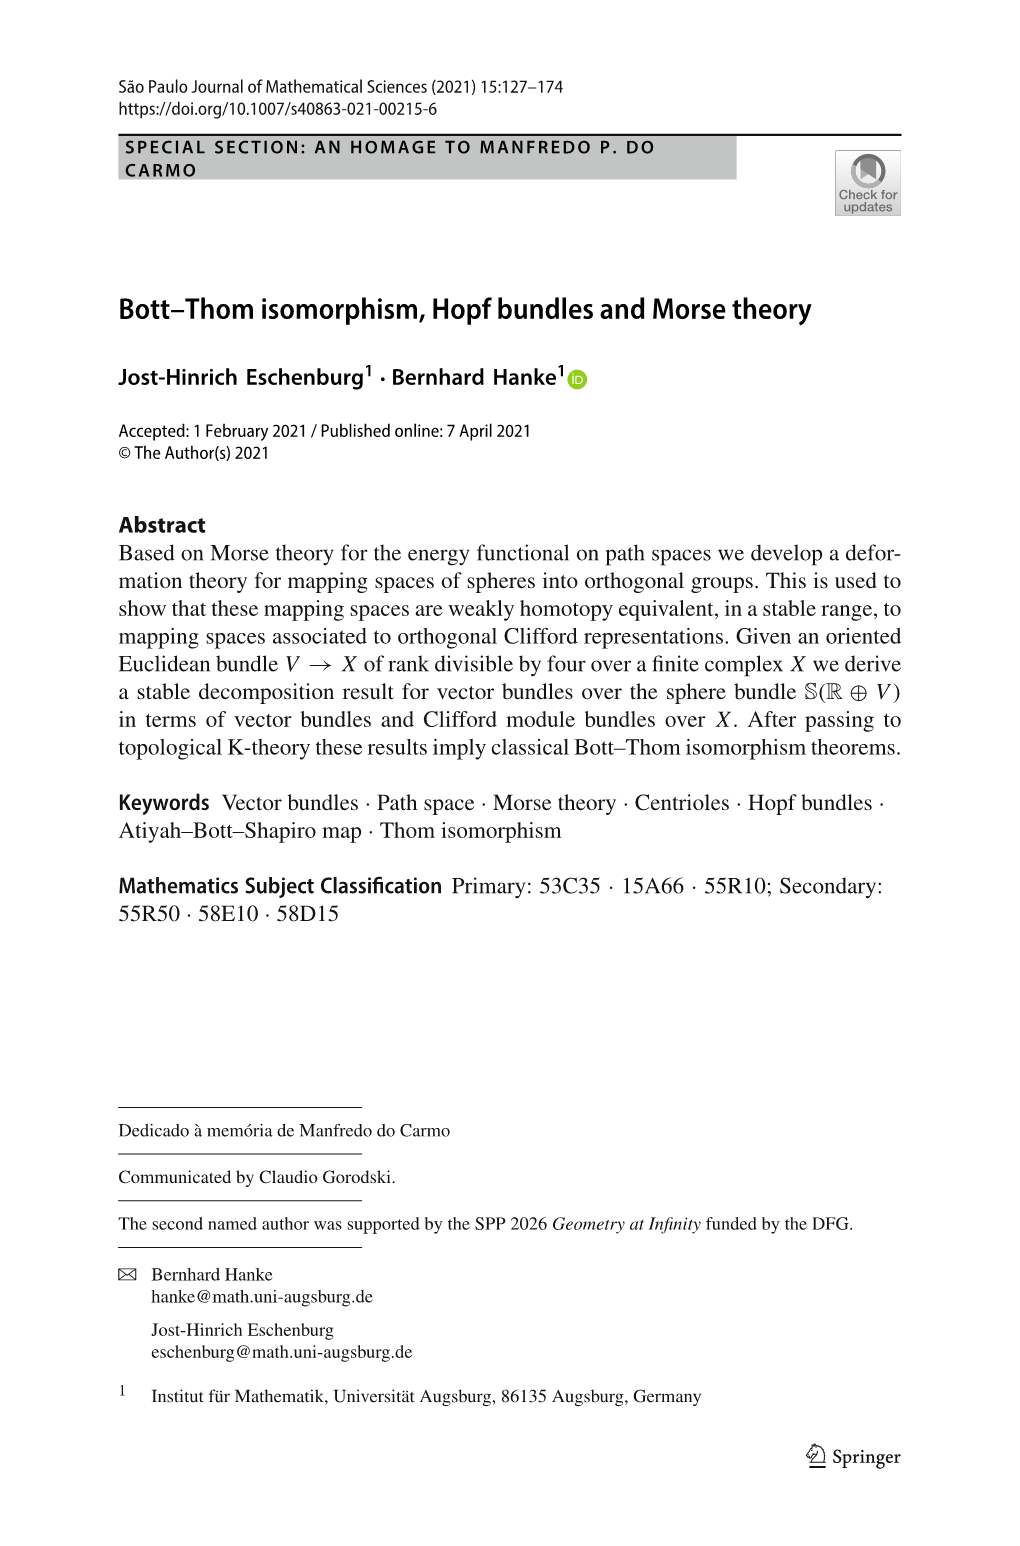 Bott–Thom Isomorphism, Hopf Bundles and Morse Theory